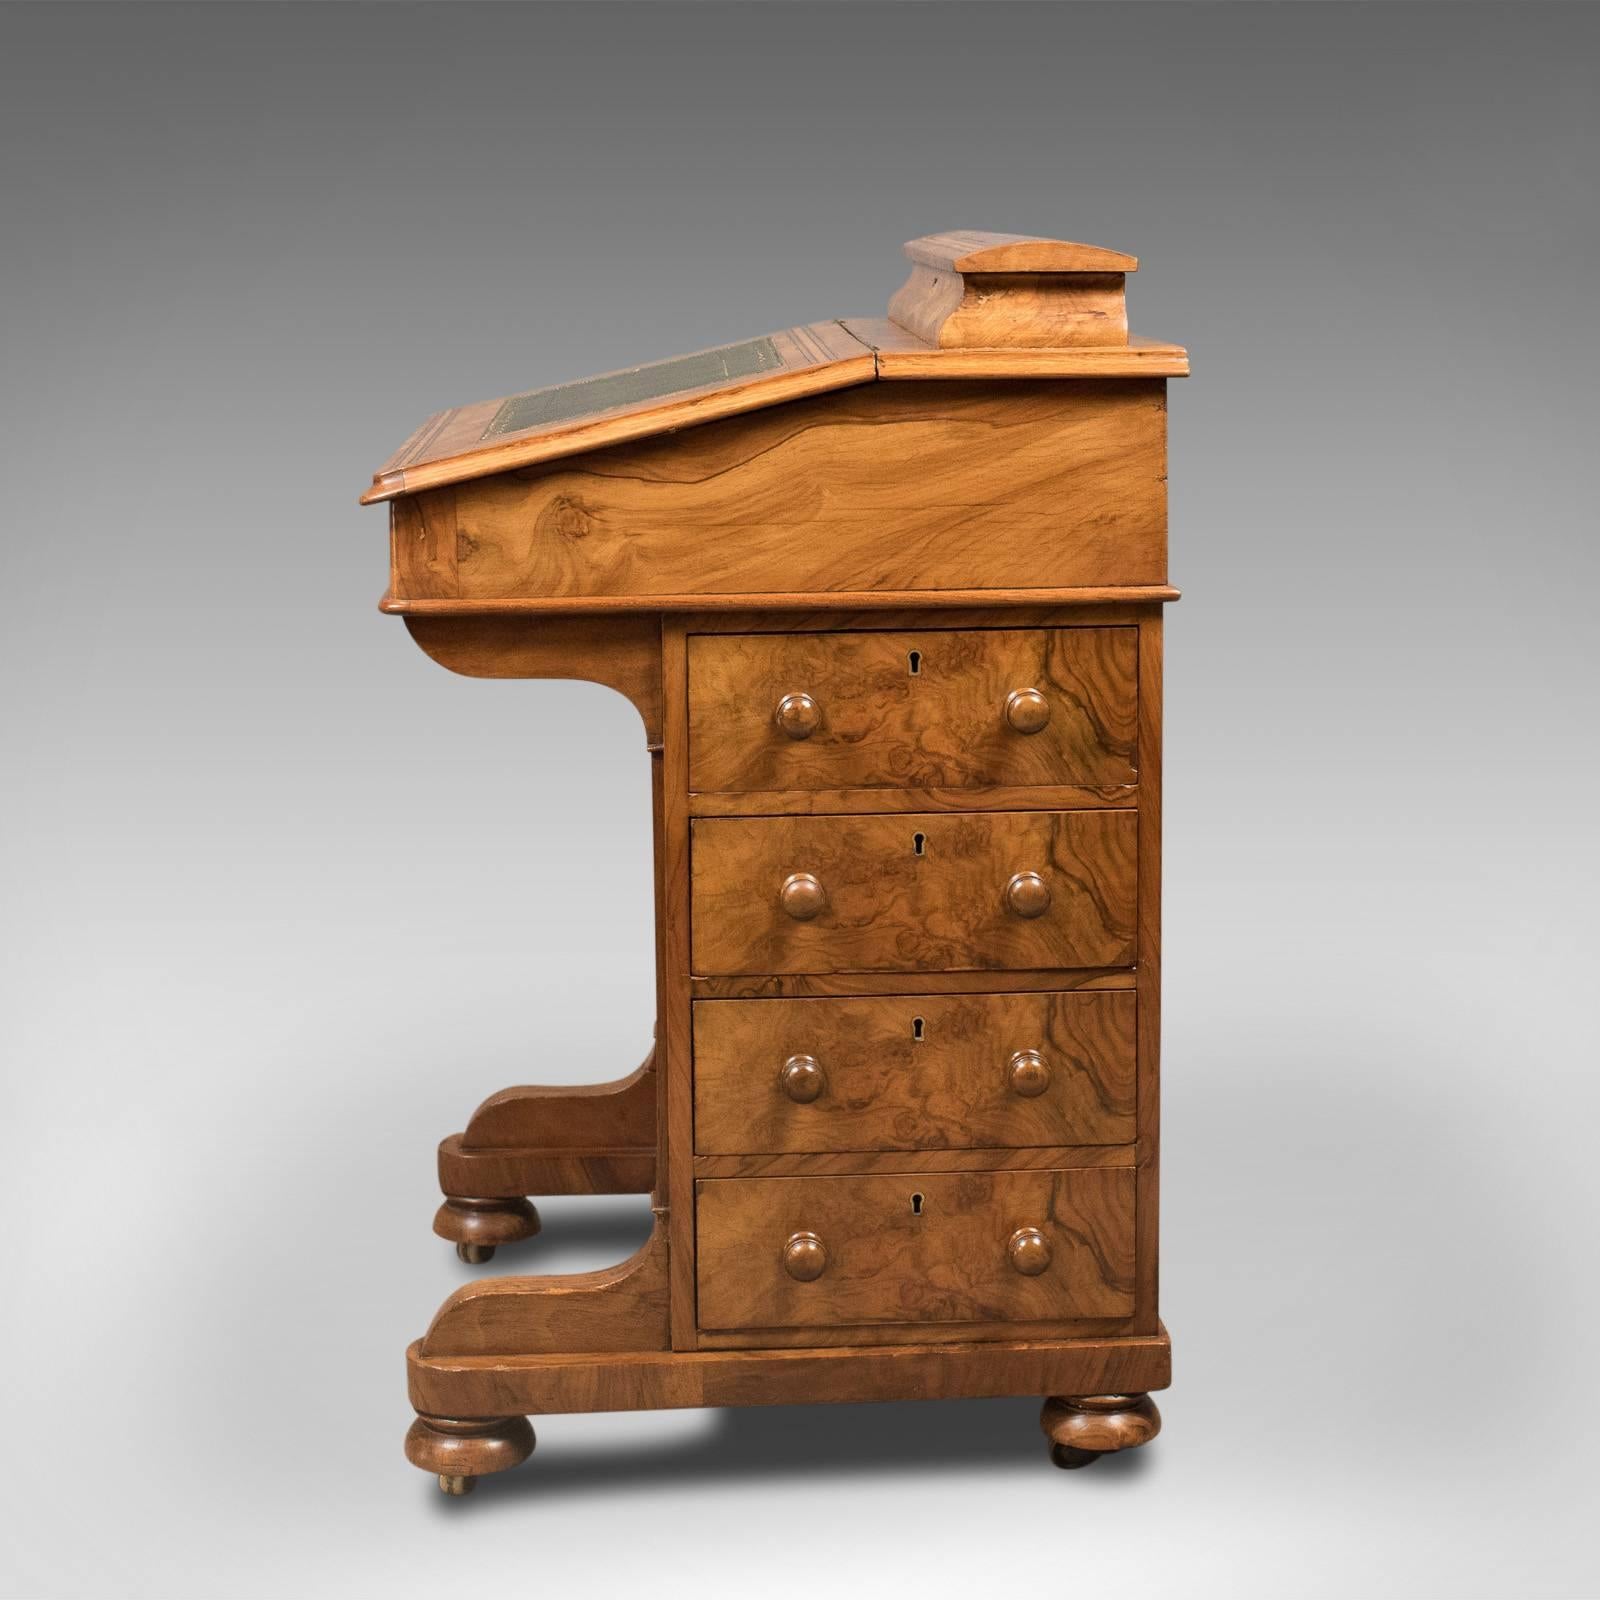 19th Century Victorian Antique Davenport, Burr Walnut English Desk, Writing Table, circa 1850